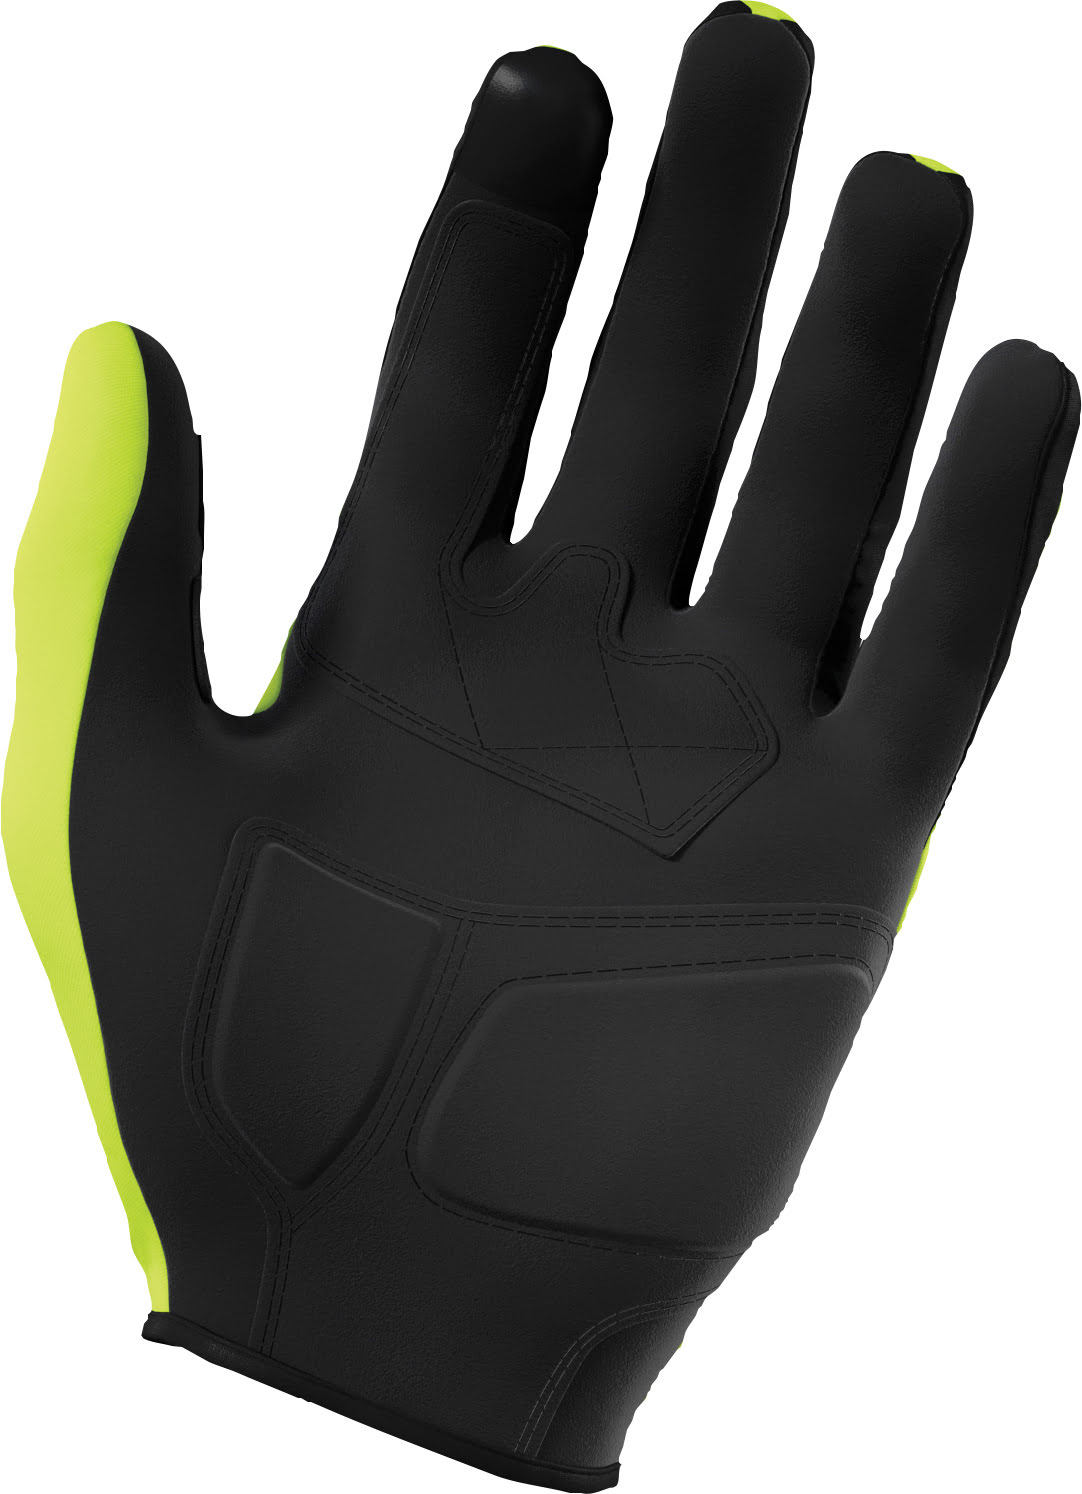 Gloves TRAINER CE 3.0 Neon Yellow SHOT 